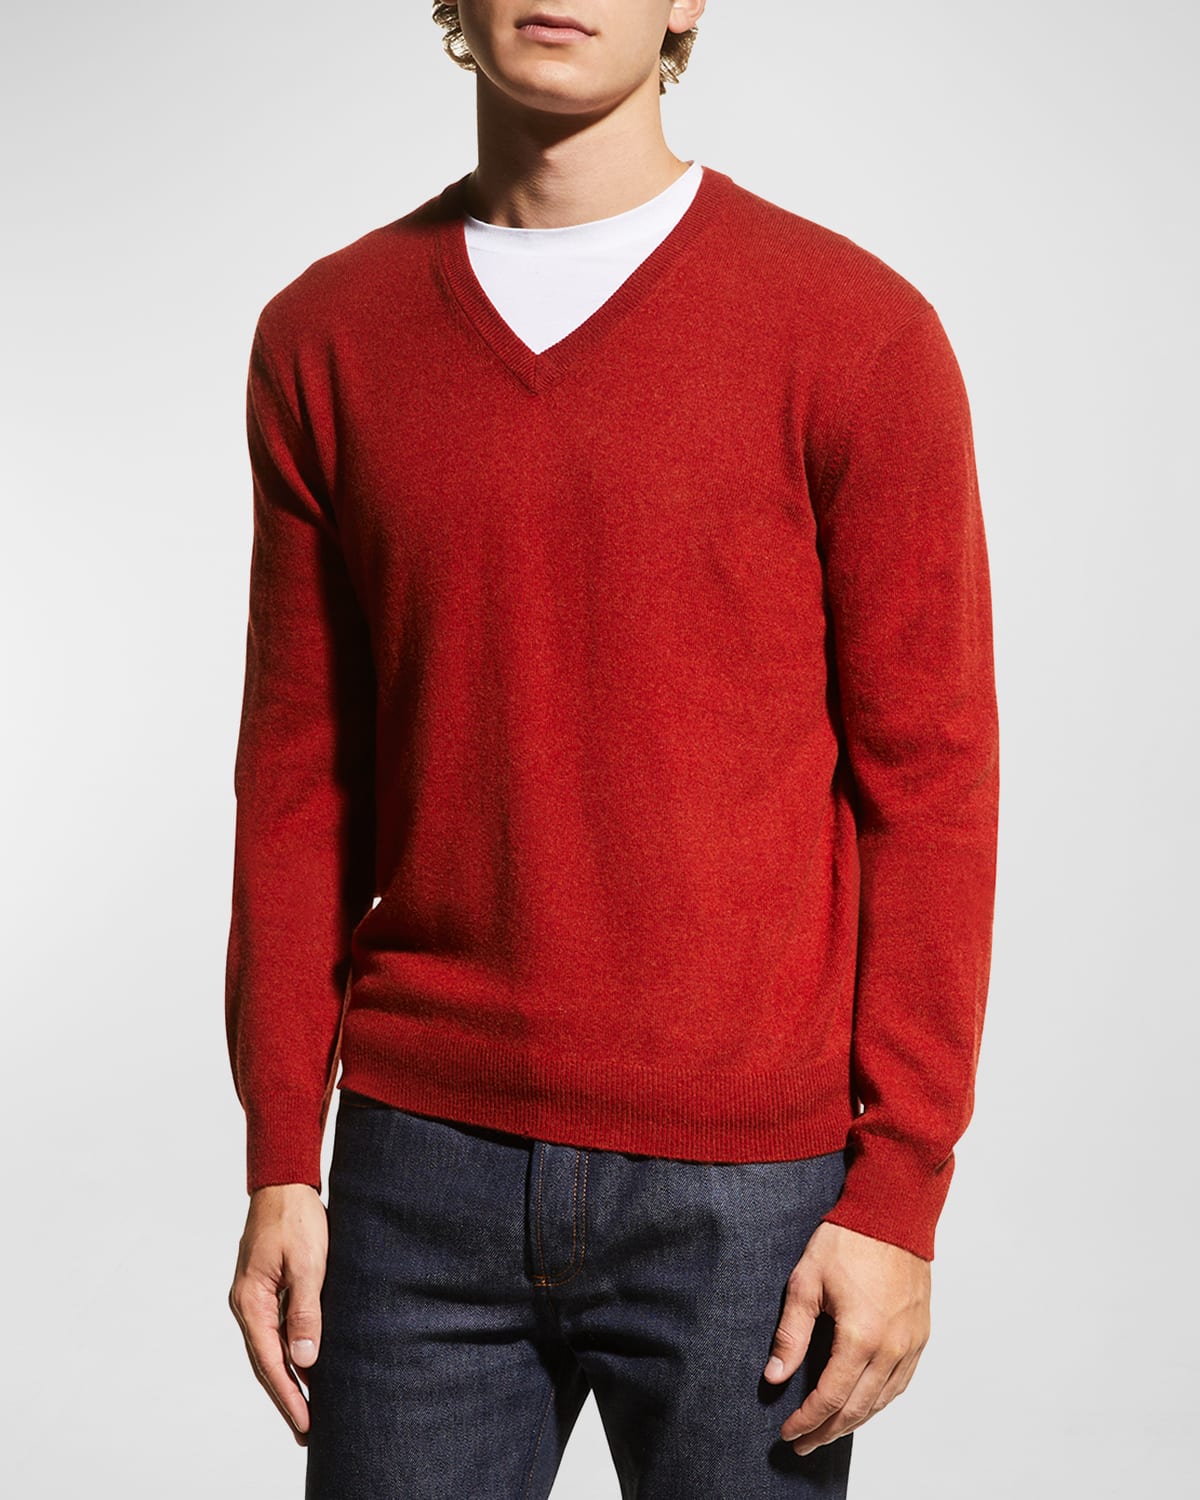 Neiman Marcus Men's Wool-cashmere Knit V-neck Sweater